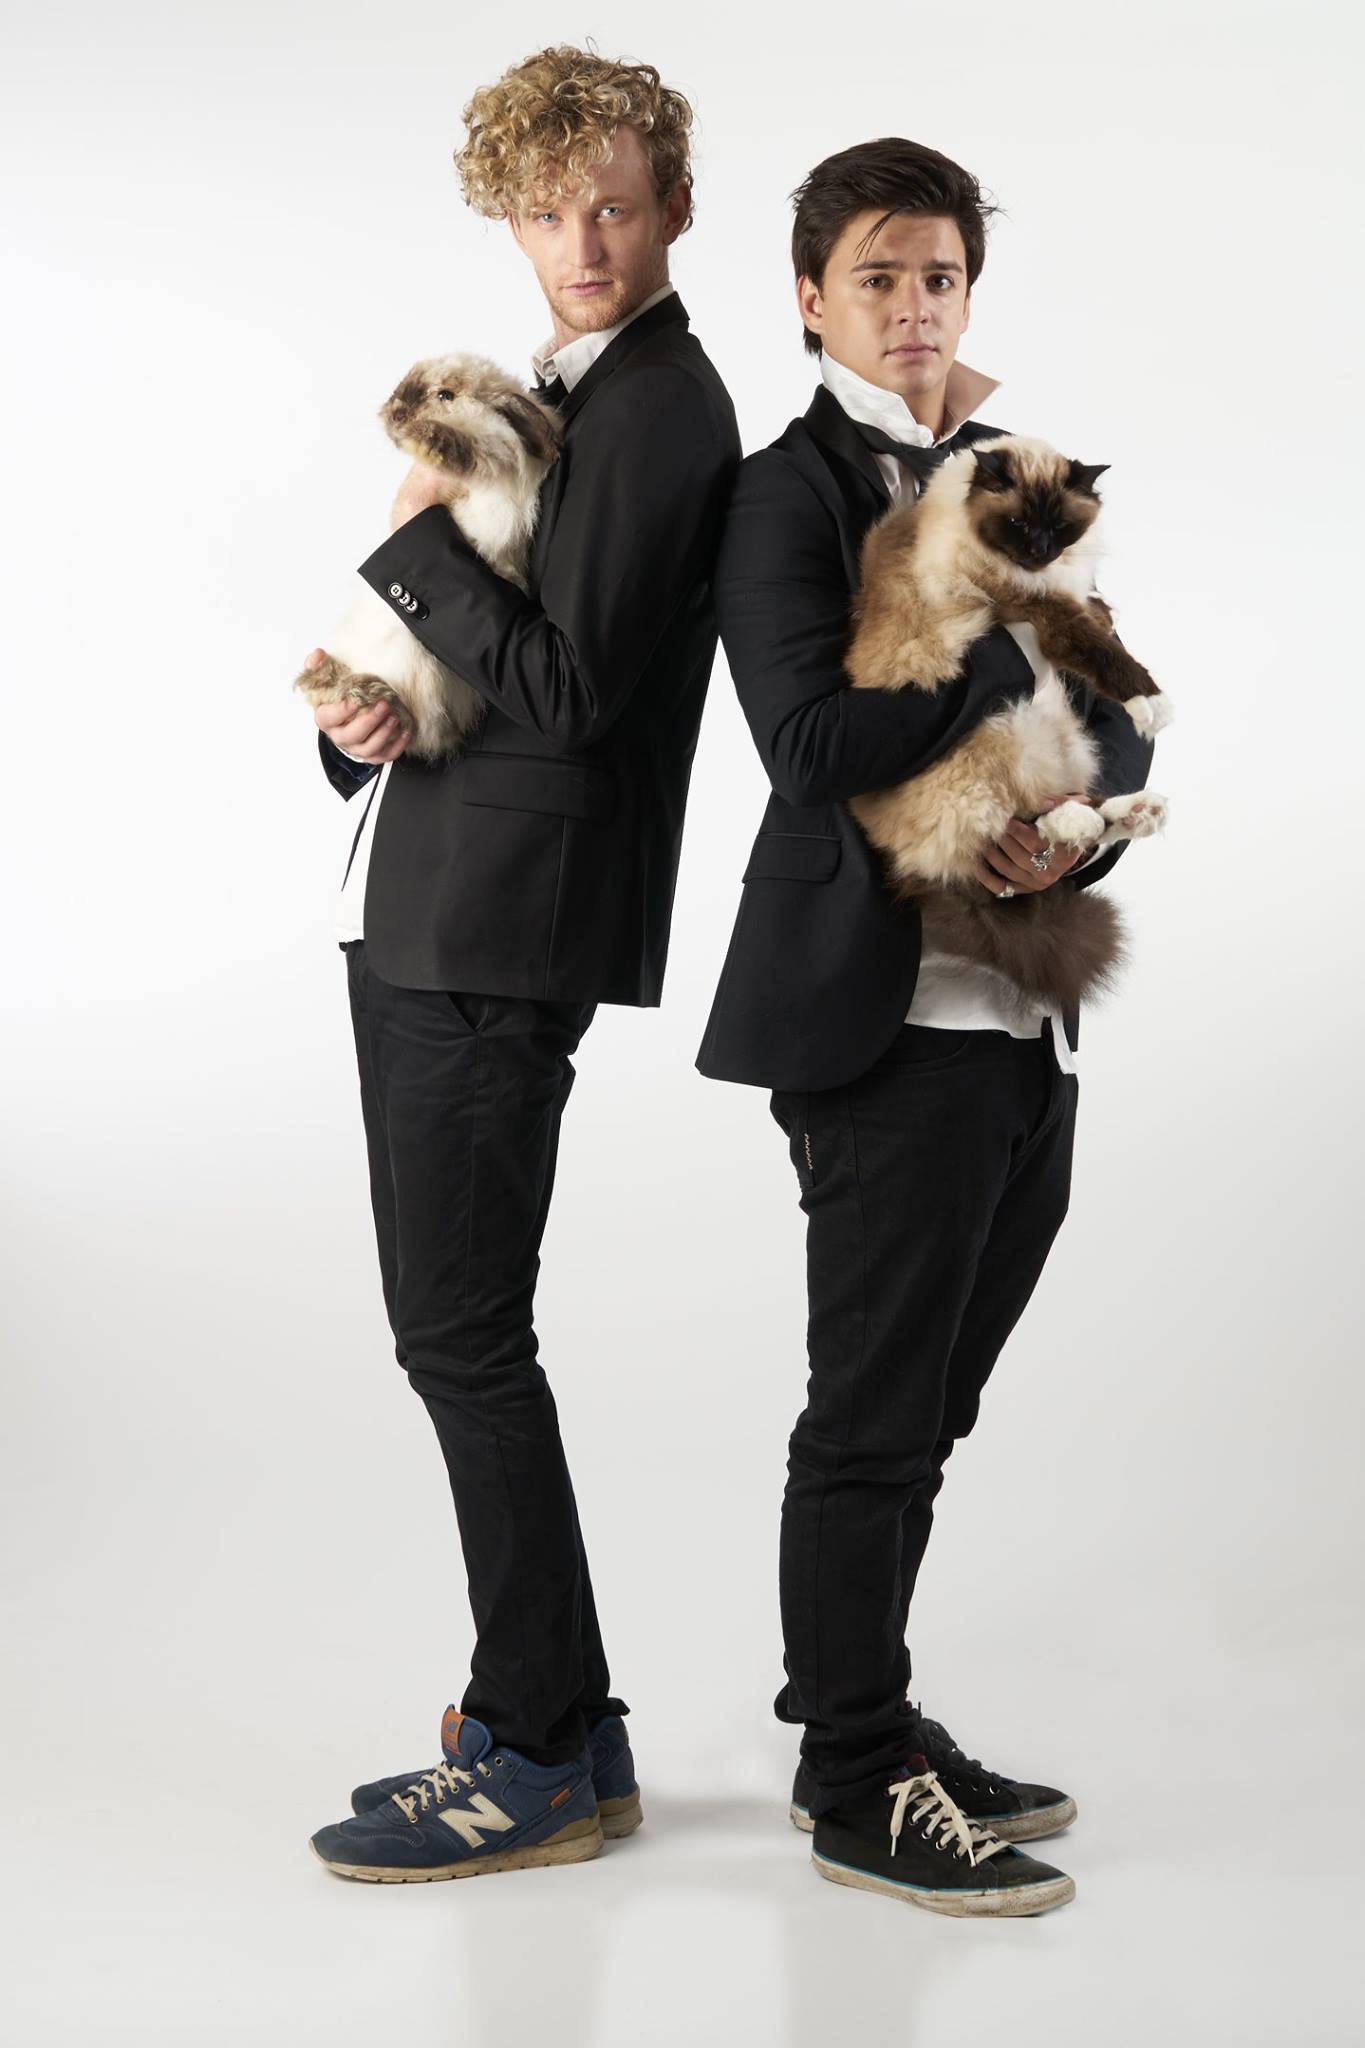 Chris & Josh Promotional Image